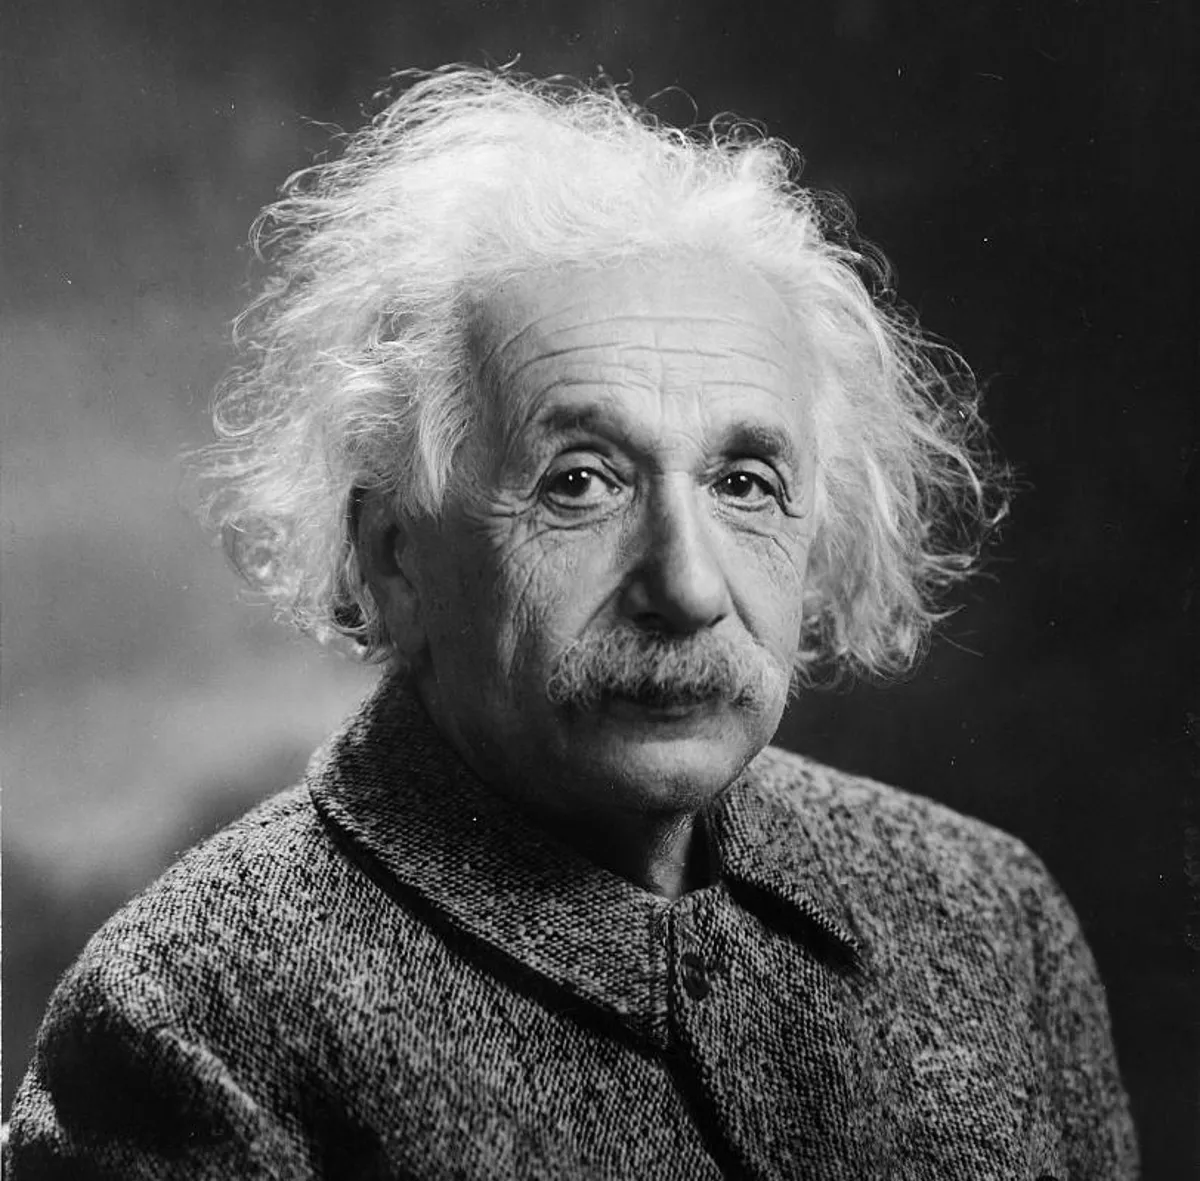 General relativity article 4 - نظریه نسبیت عام:نظریه انیشتین چگونه ساختار زمان و فضا را شکست